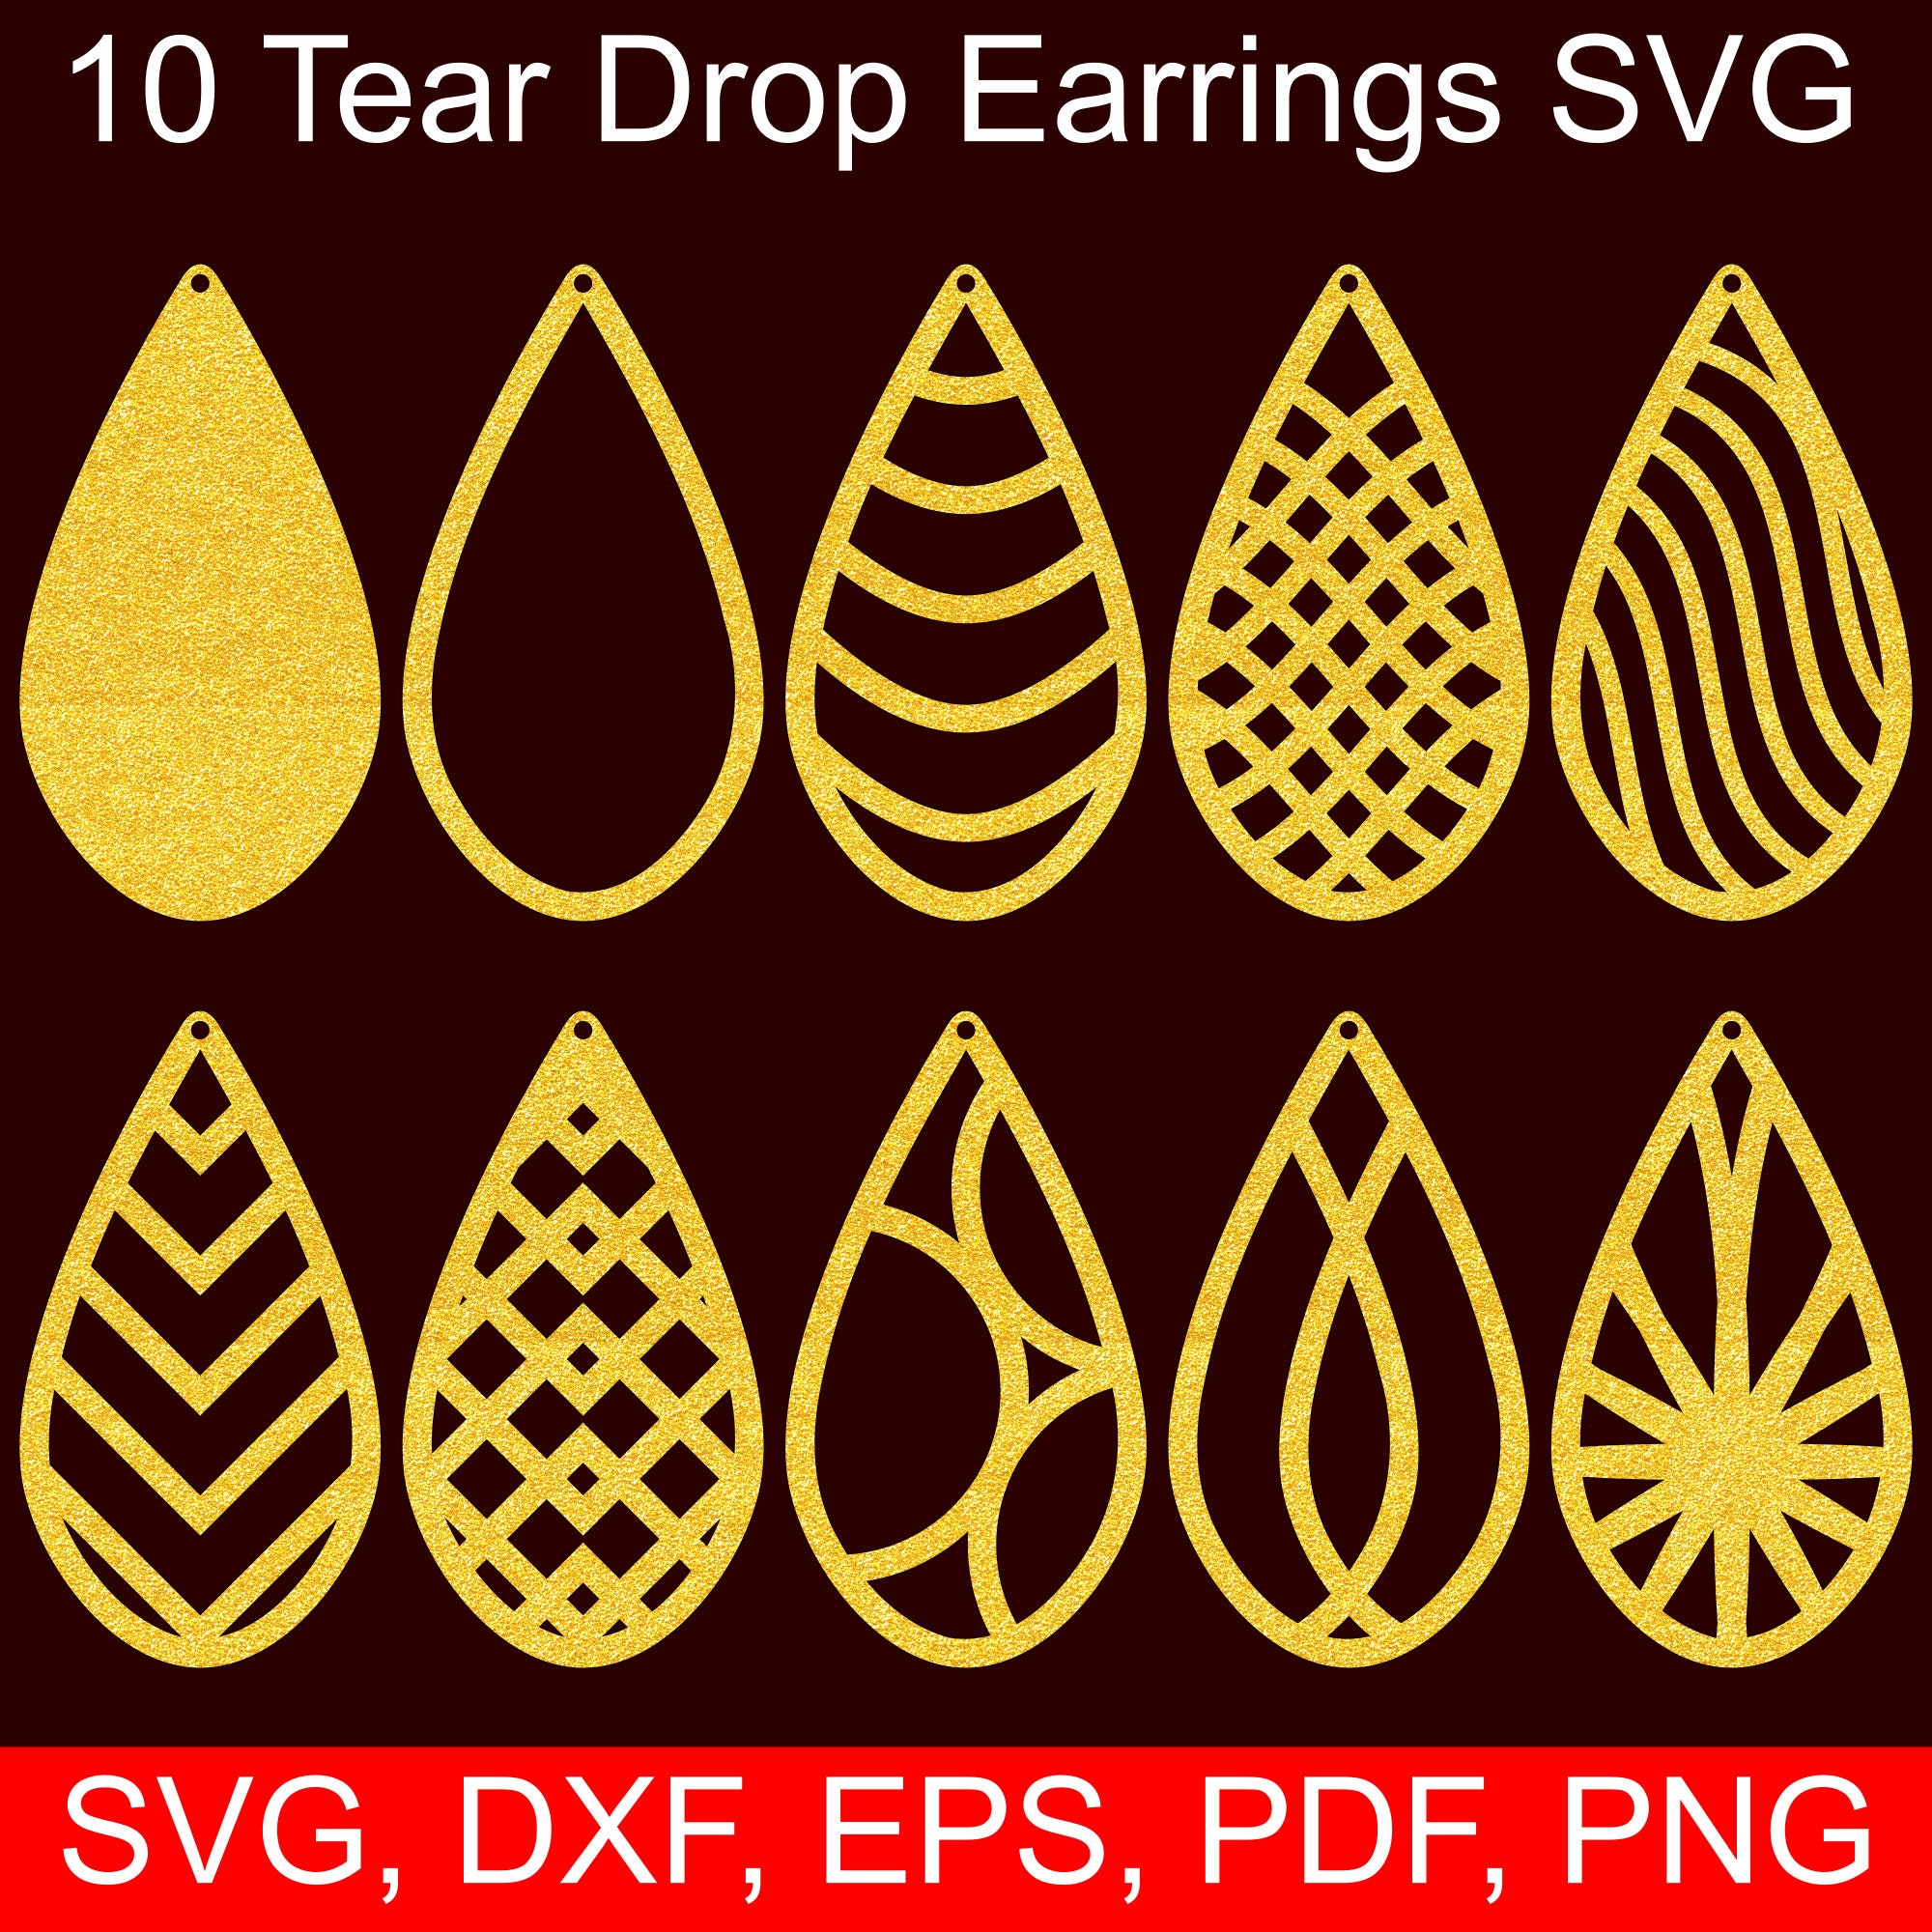 10 Tear Drop Earrings SVG Files, Tear Drop SVG Cut files for Cricut